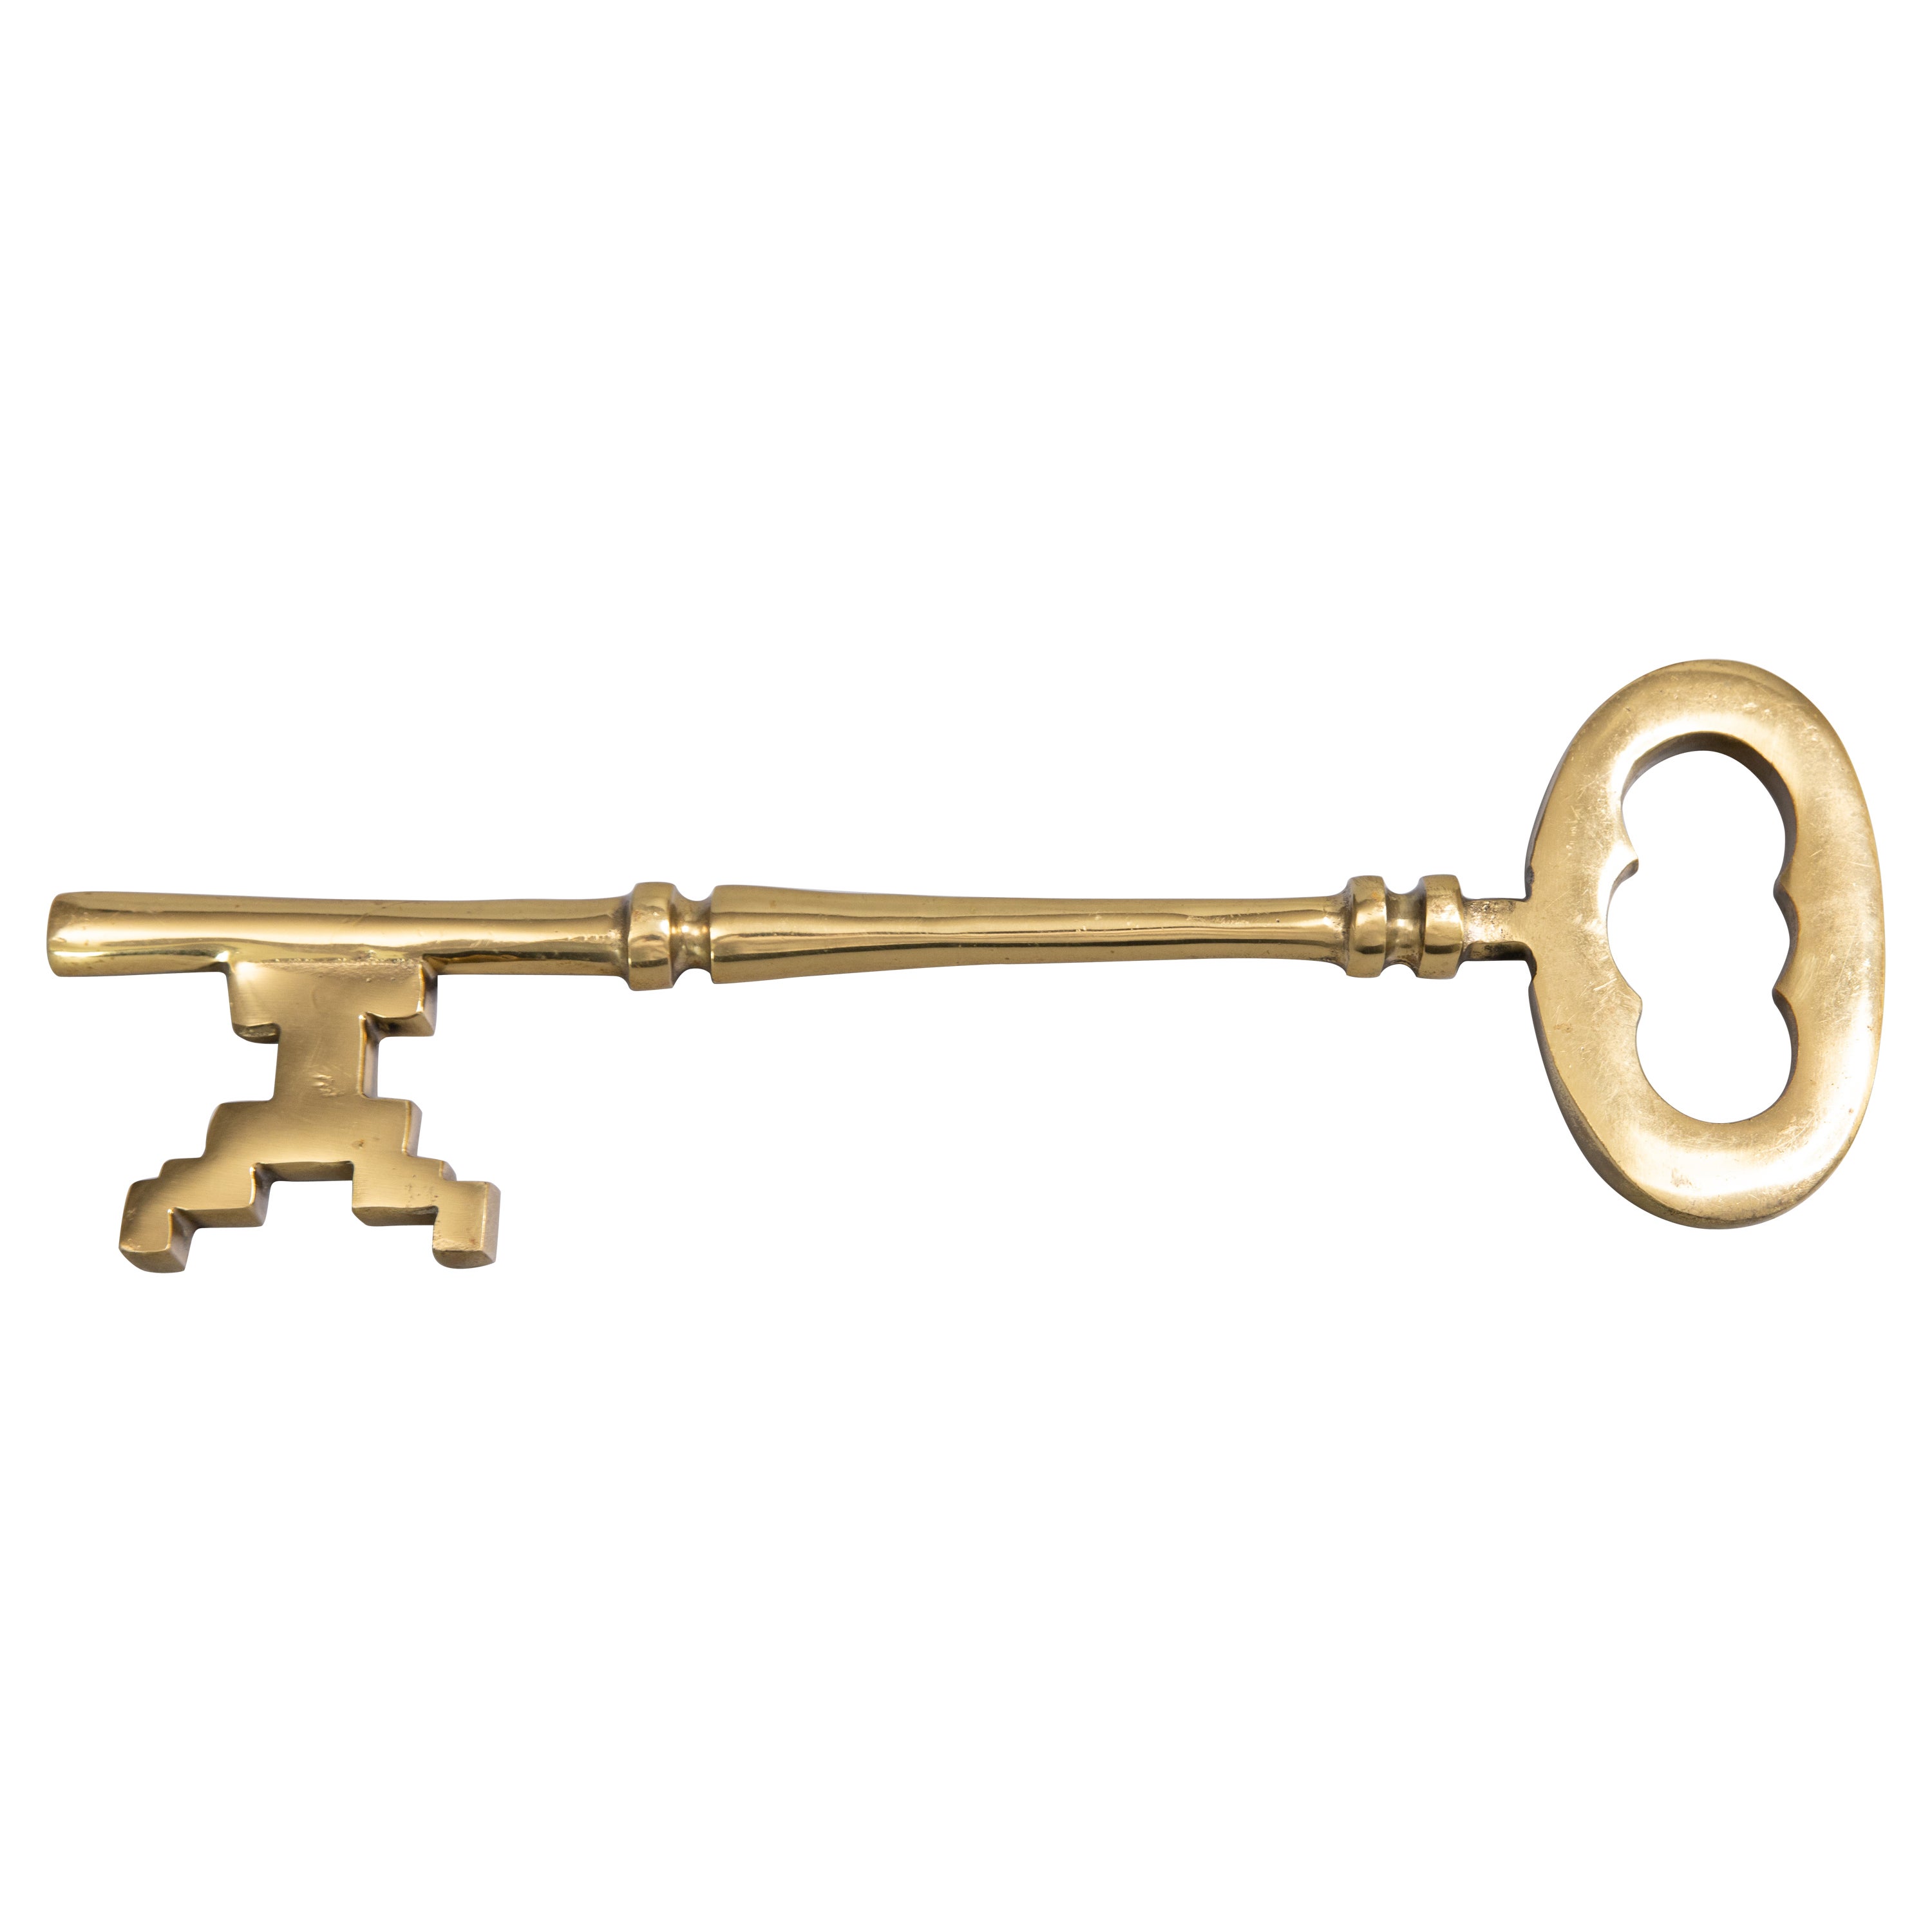 Mid-20th Century English Brass Oversized Key Objet d'Art For Sale